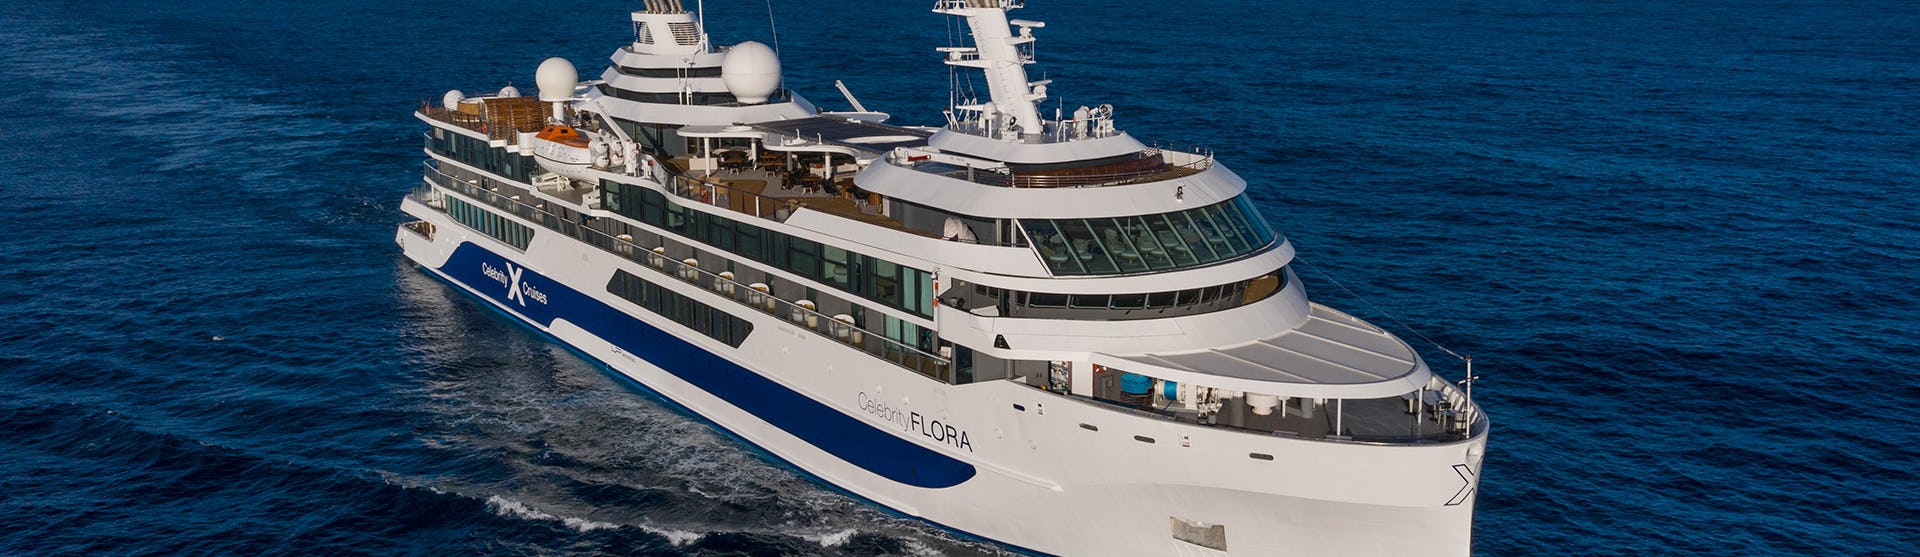 Det mindre fartyget Celebrity Flora kryssar sig fram i klartblått vatten.